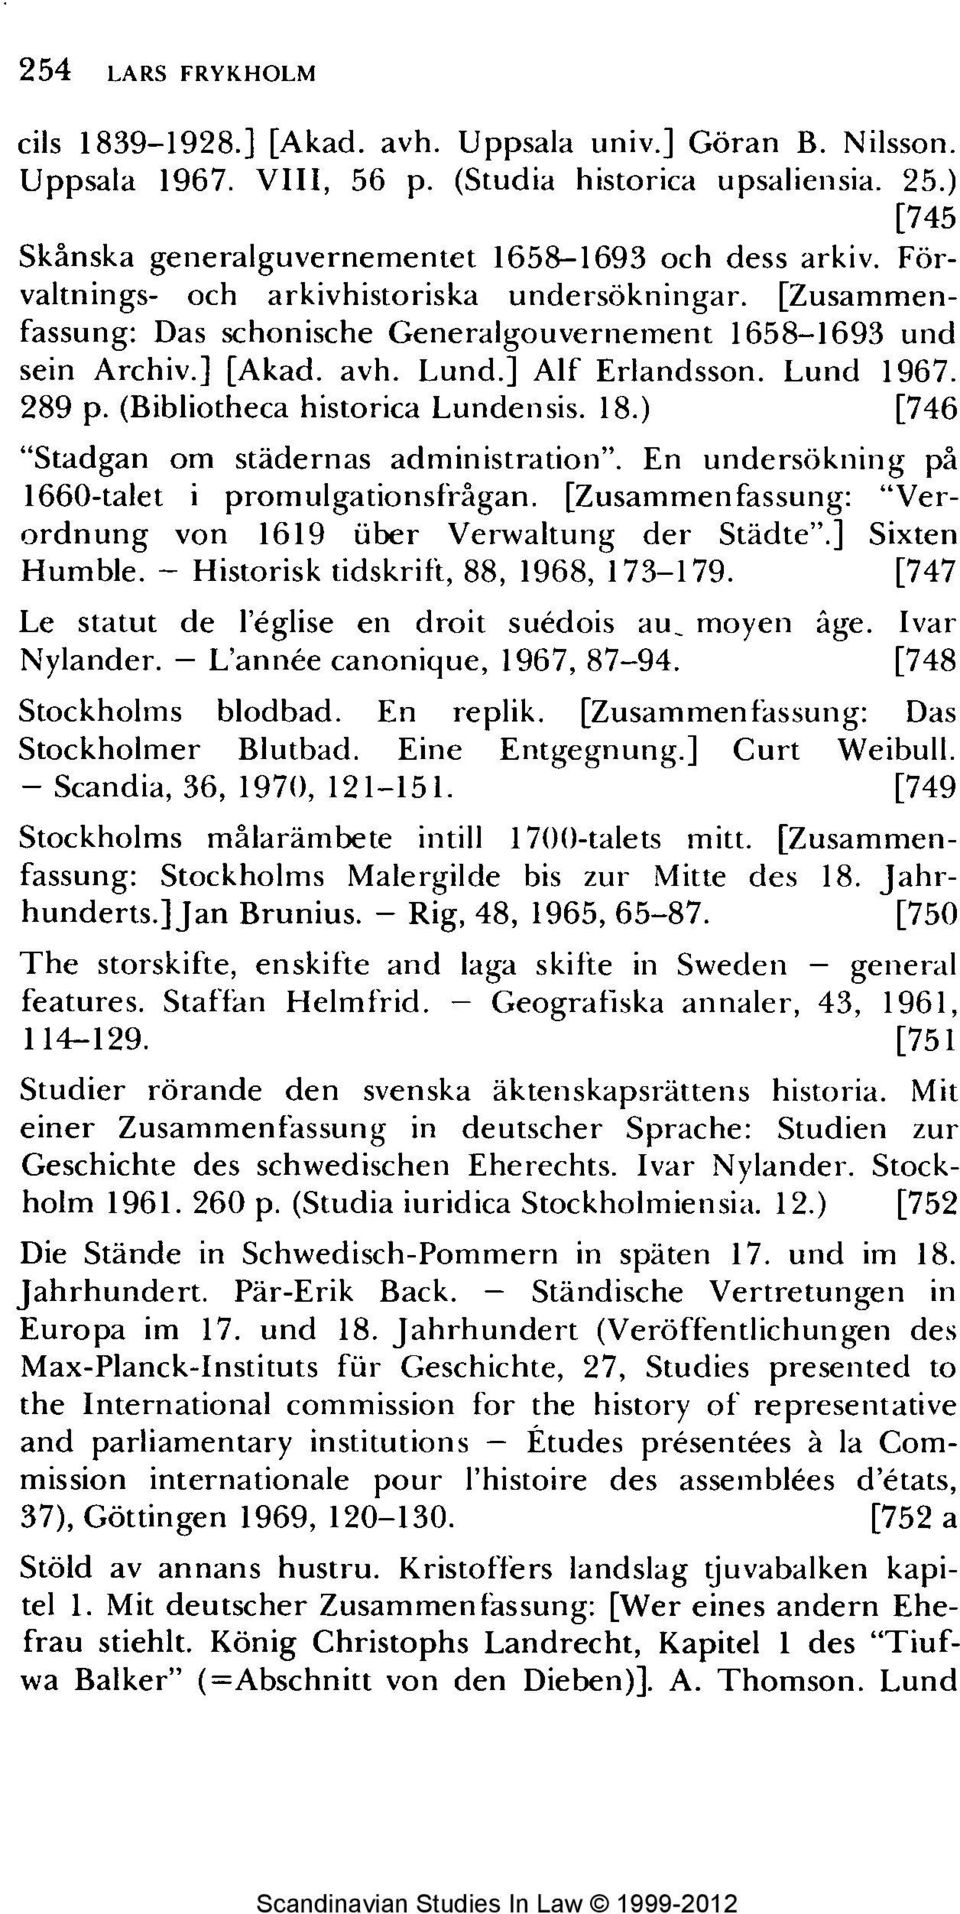 avh. Lund.] Alf Erlandsson. Lund 1967. 289 p. (Bibliotheca historica Lundensis. 18.) [746 "Stadgan om stadernas administration". En unders6kning pai 1660-talet i promulgationsfr'gan.